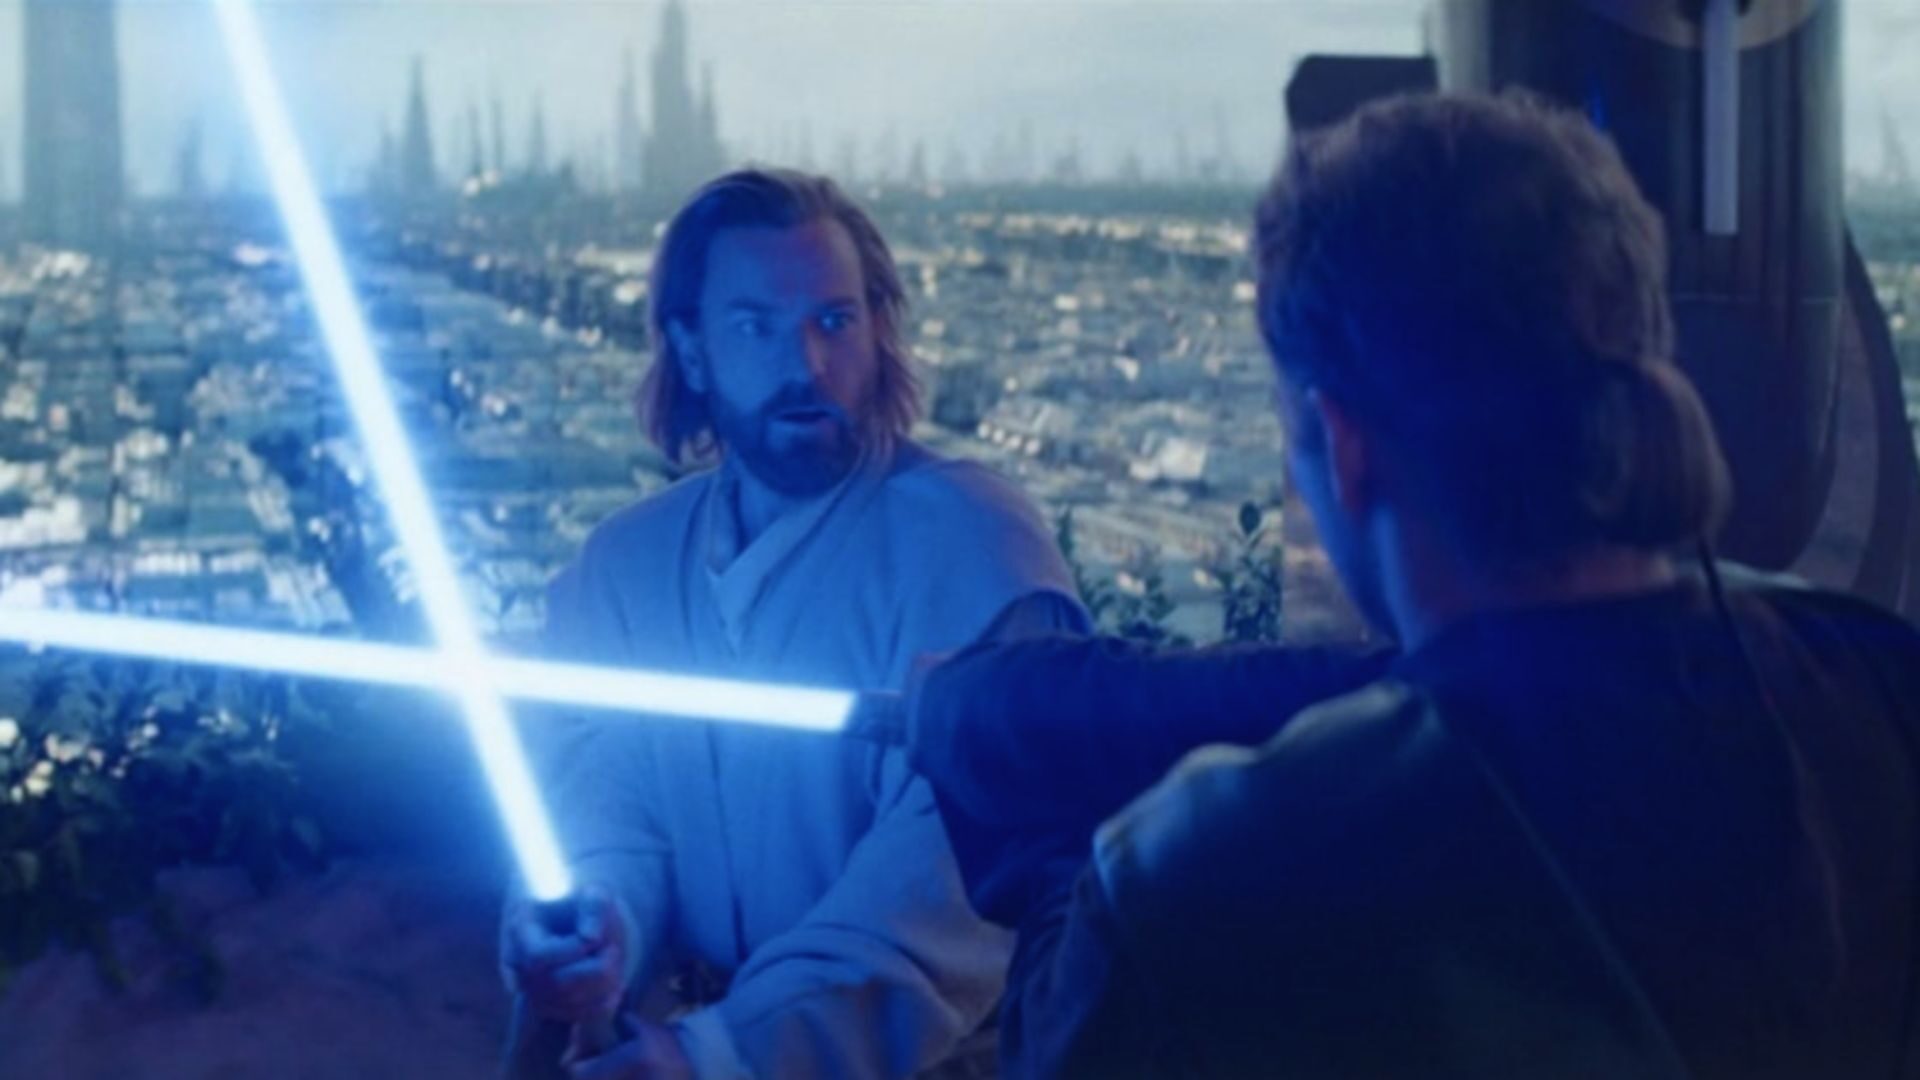 Obi-Wan kenobi - Cinematographe.it